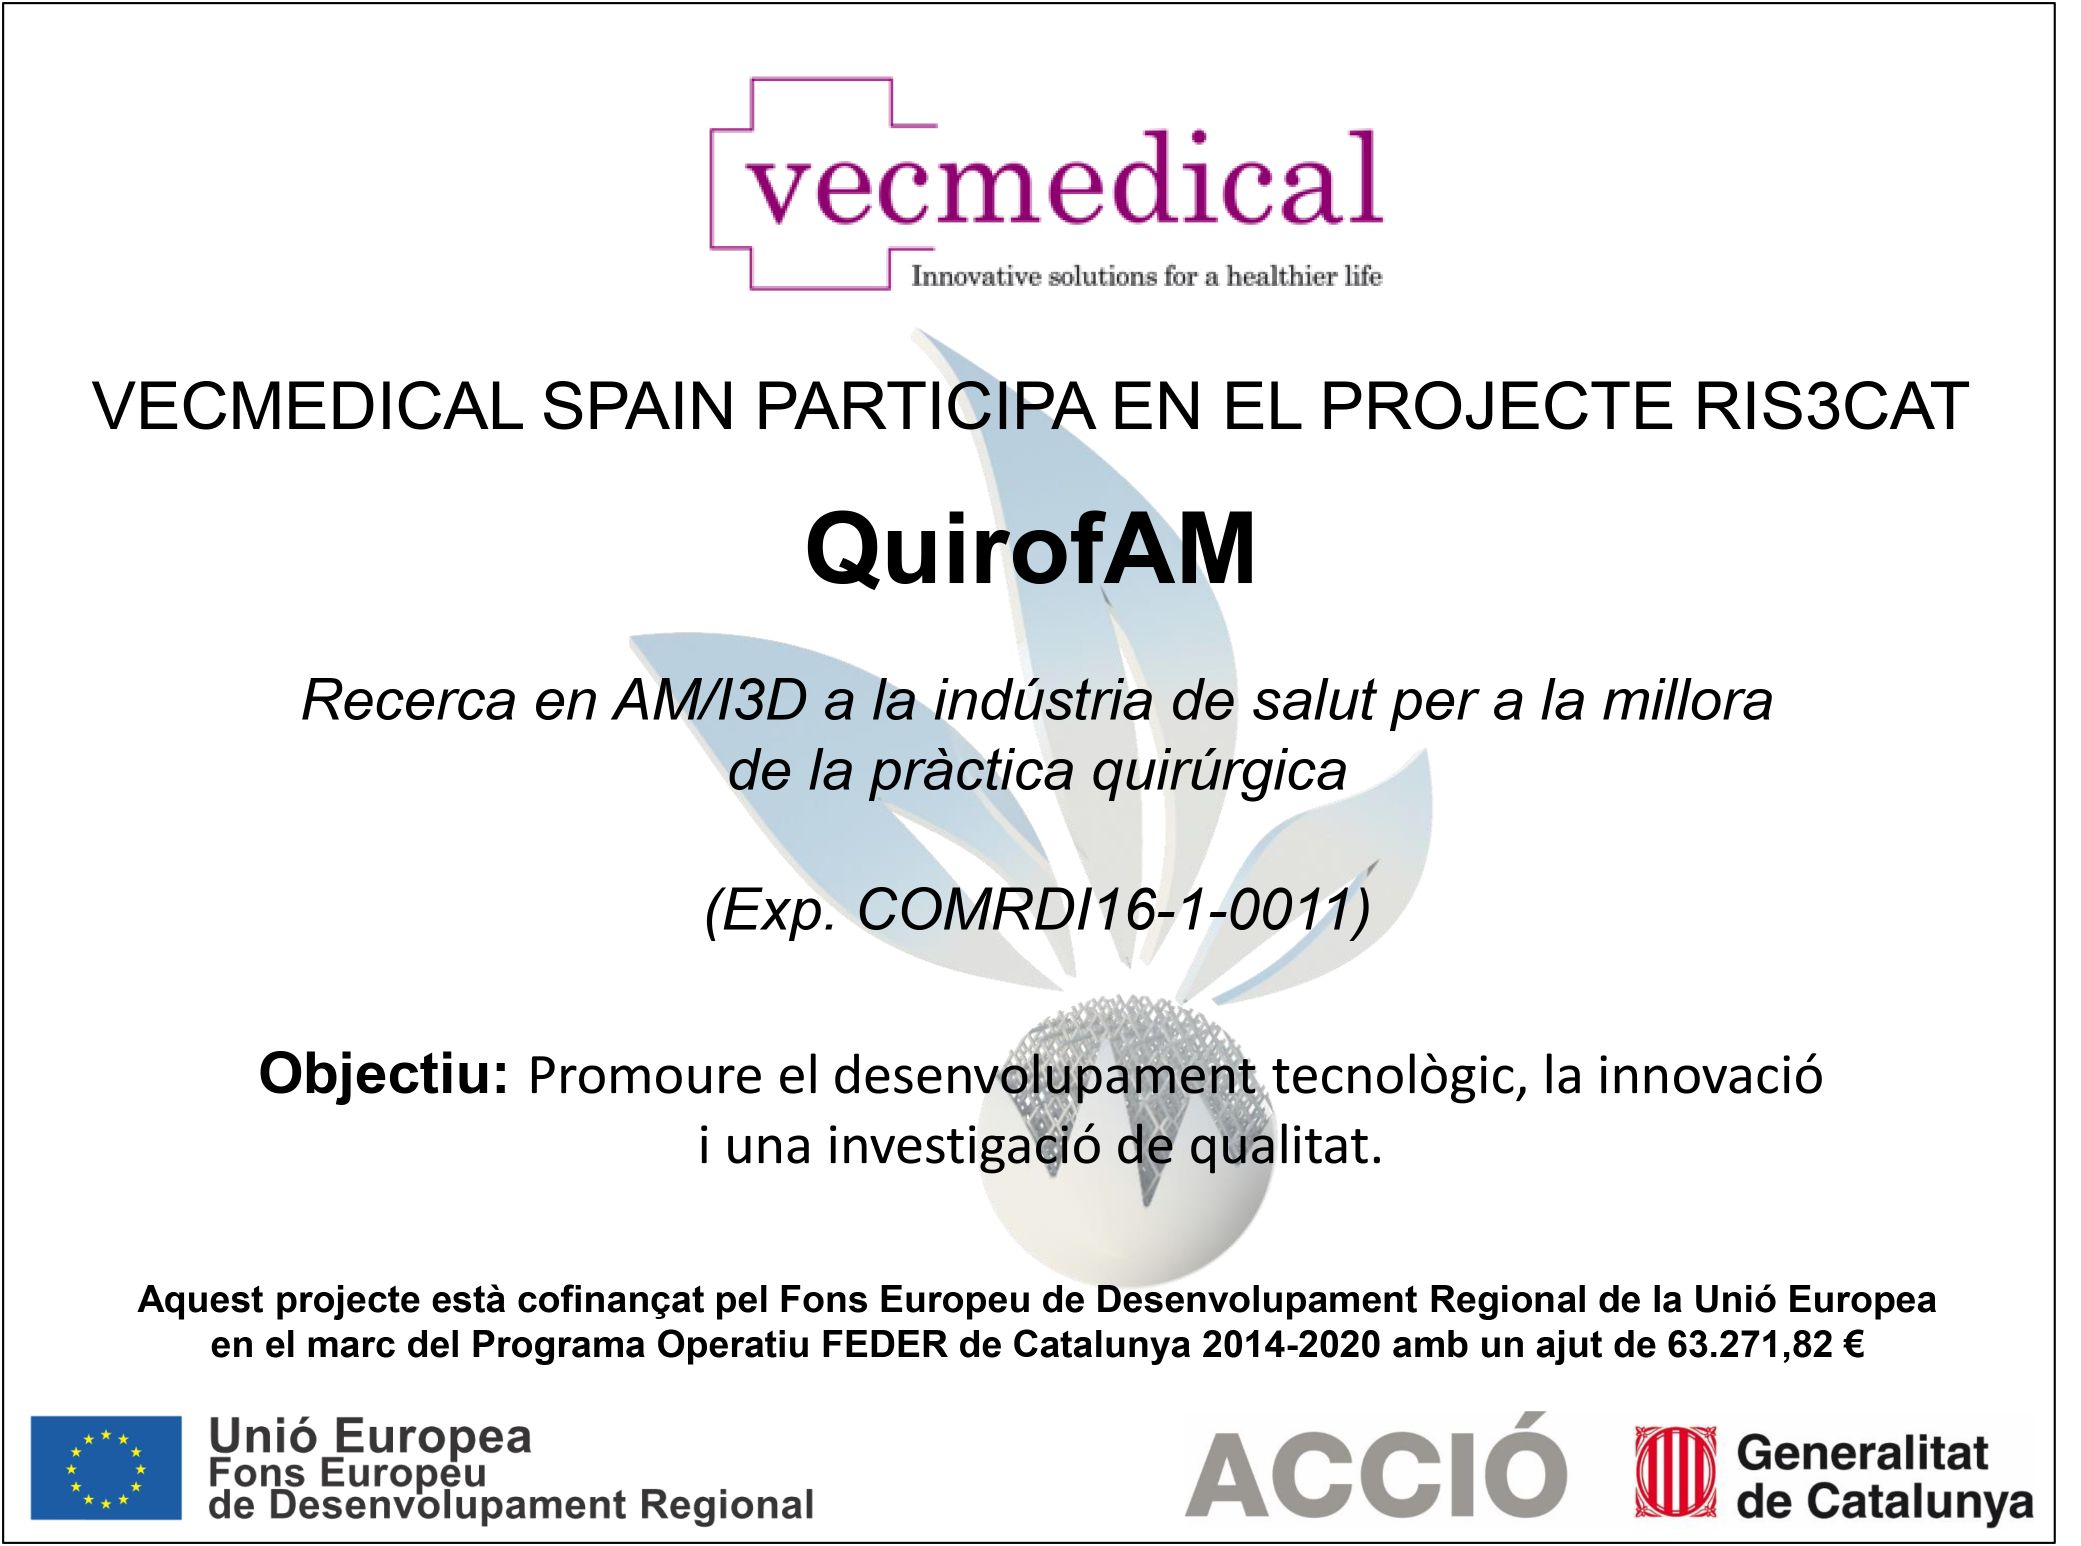 quirofam Vecmedical Spain